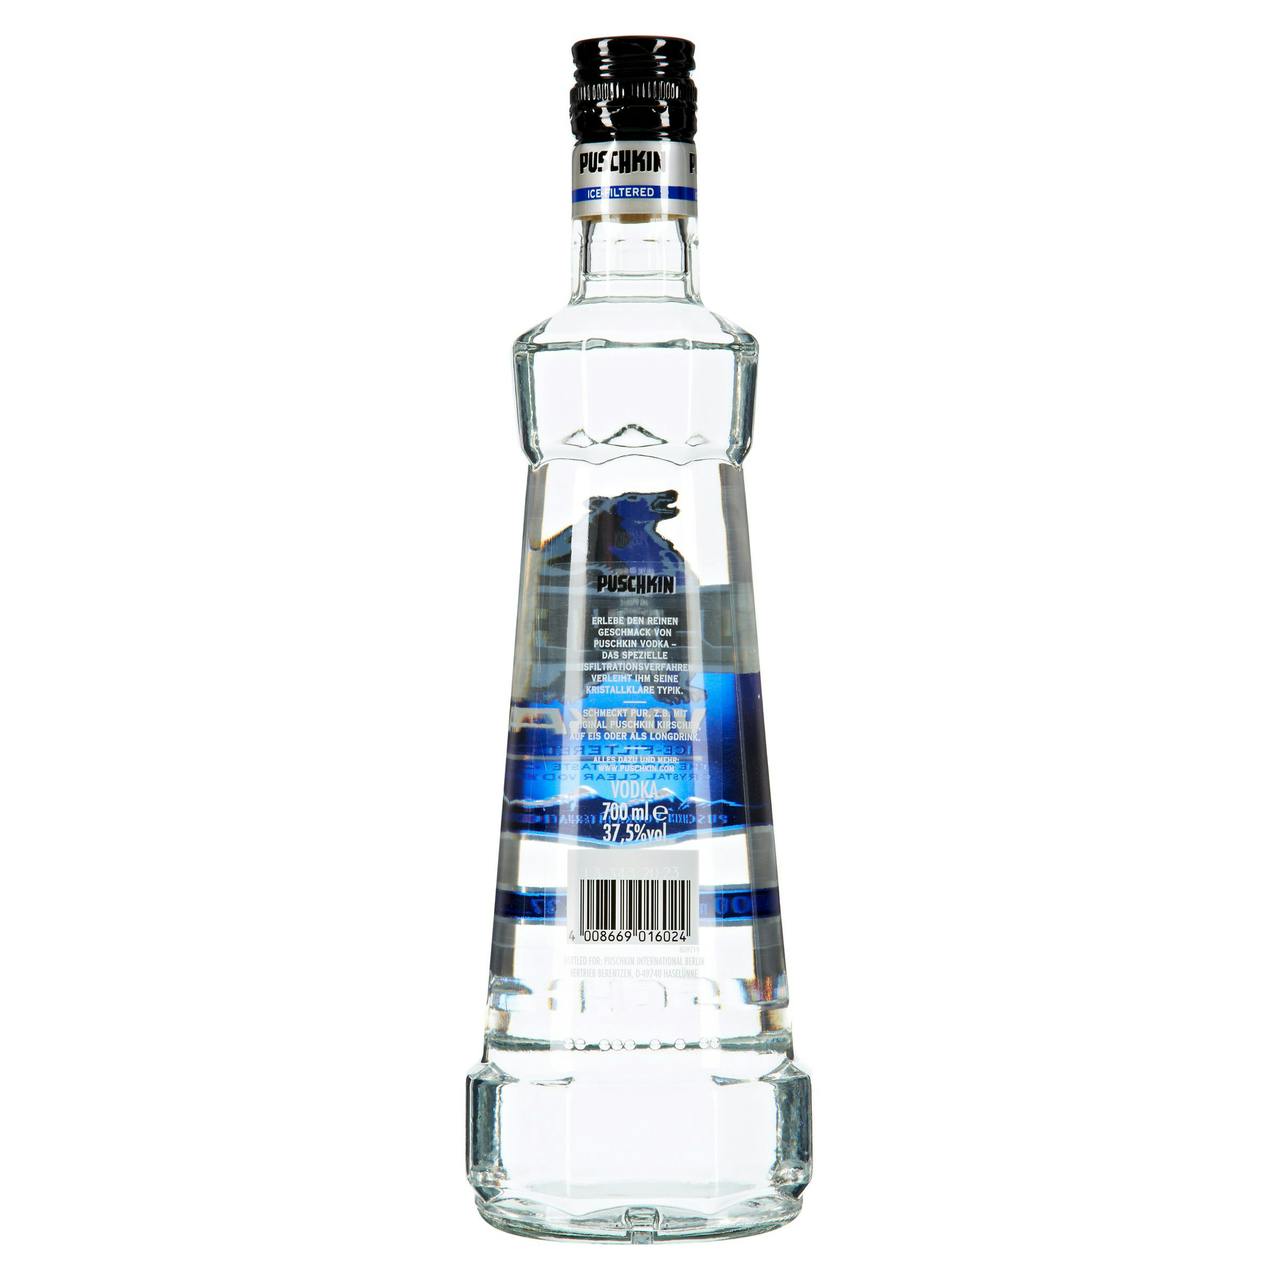 Puschkin Vodka 37,5 % Vol. 6 Flaschen x 0,7 l (4,2 l) | METRO Marktplatz